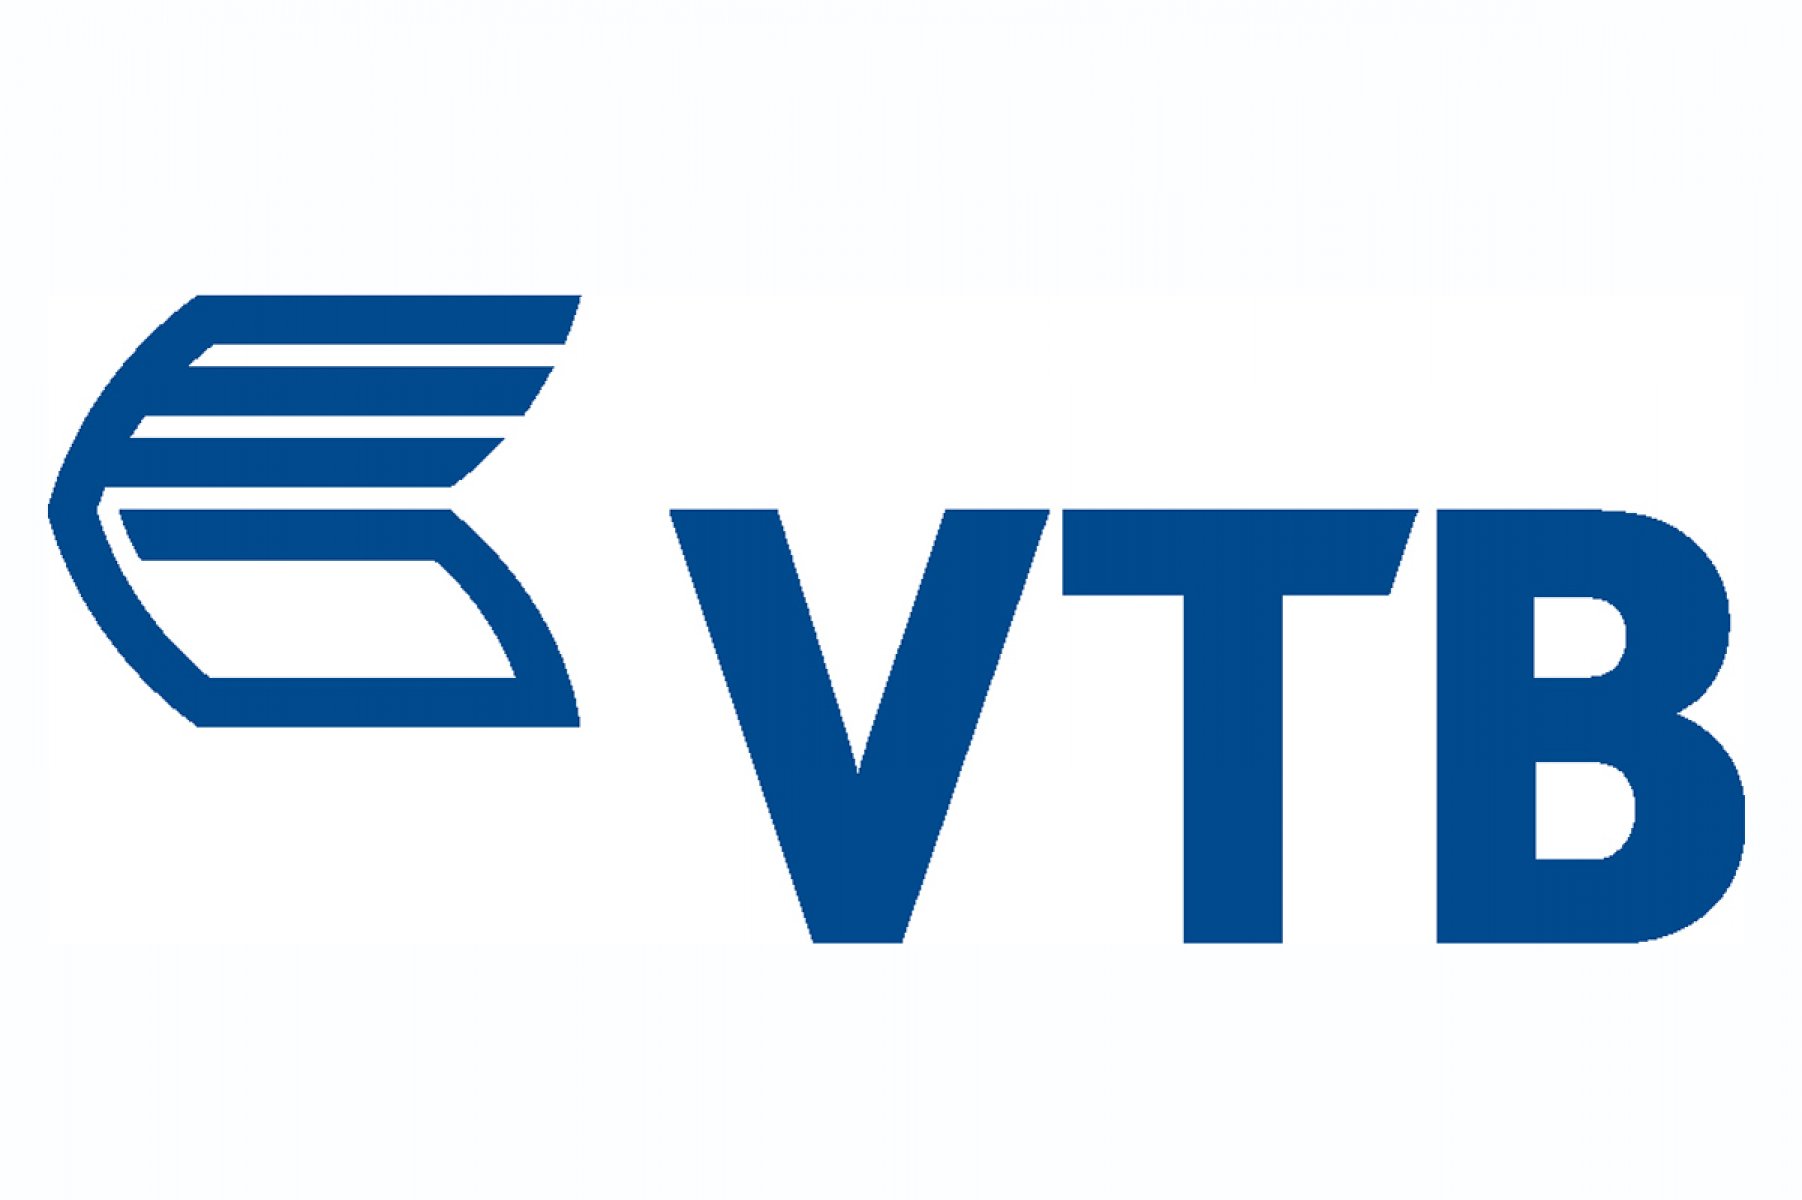 VTB Bank Azerbaijan meets all requirements